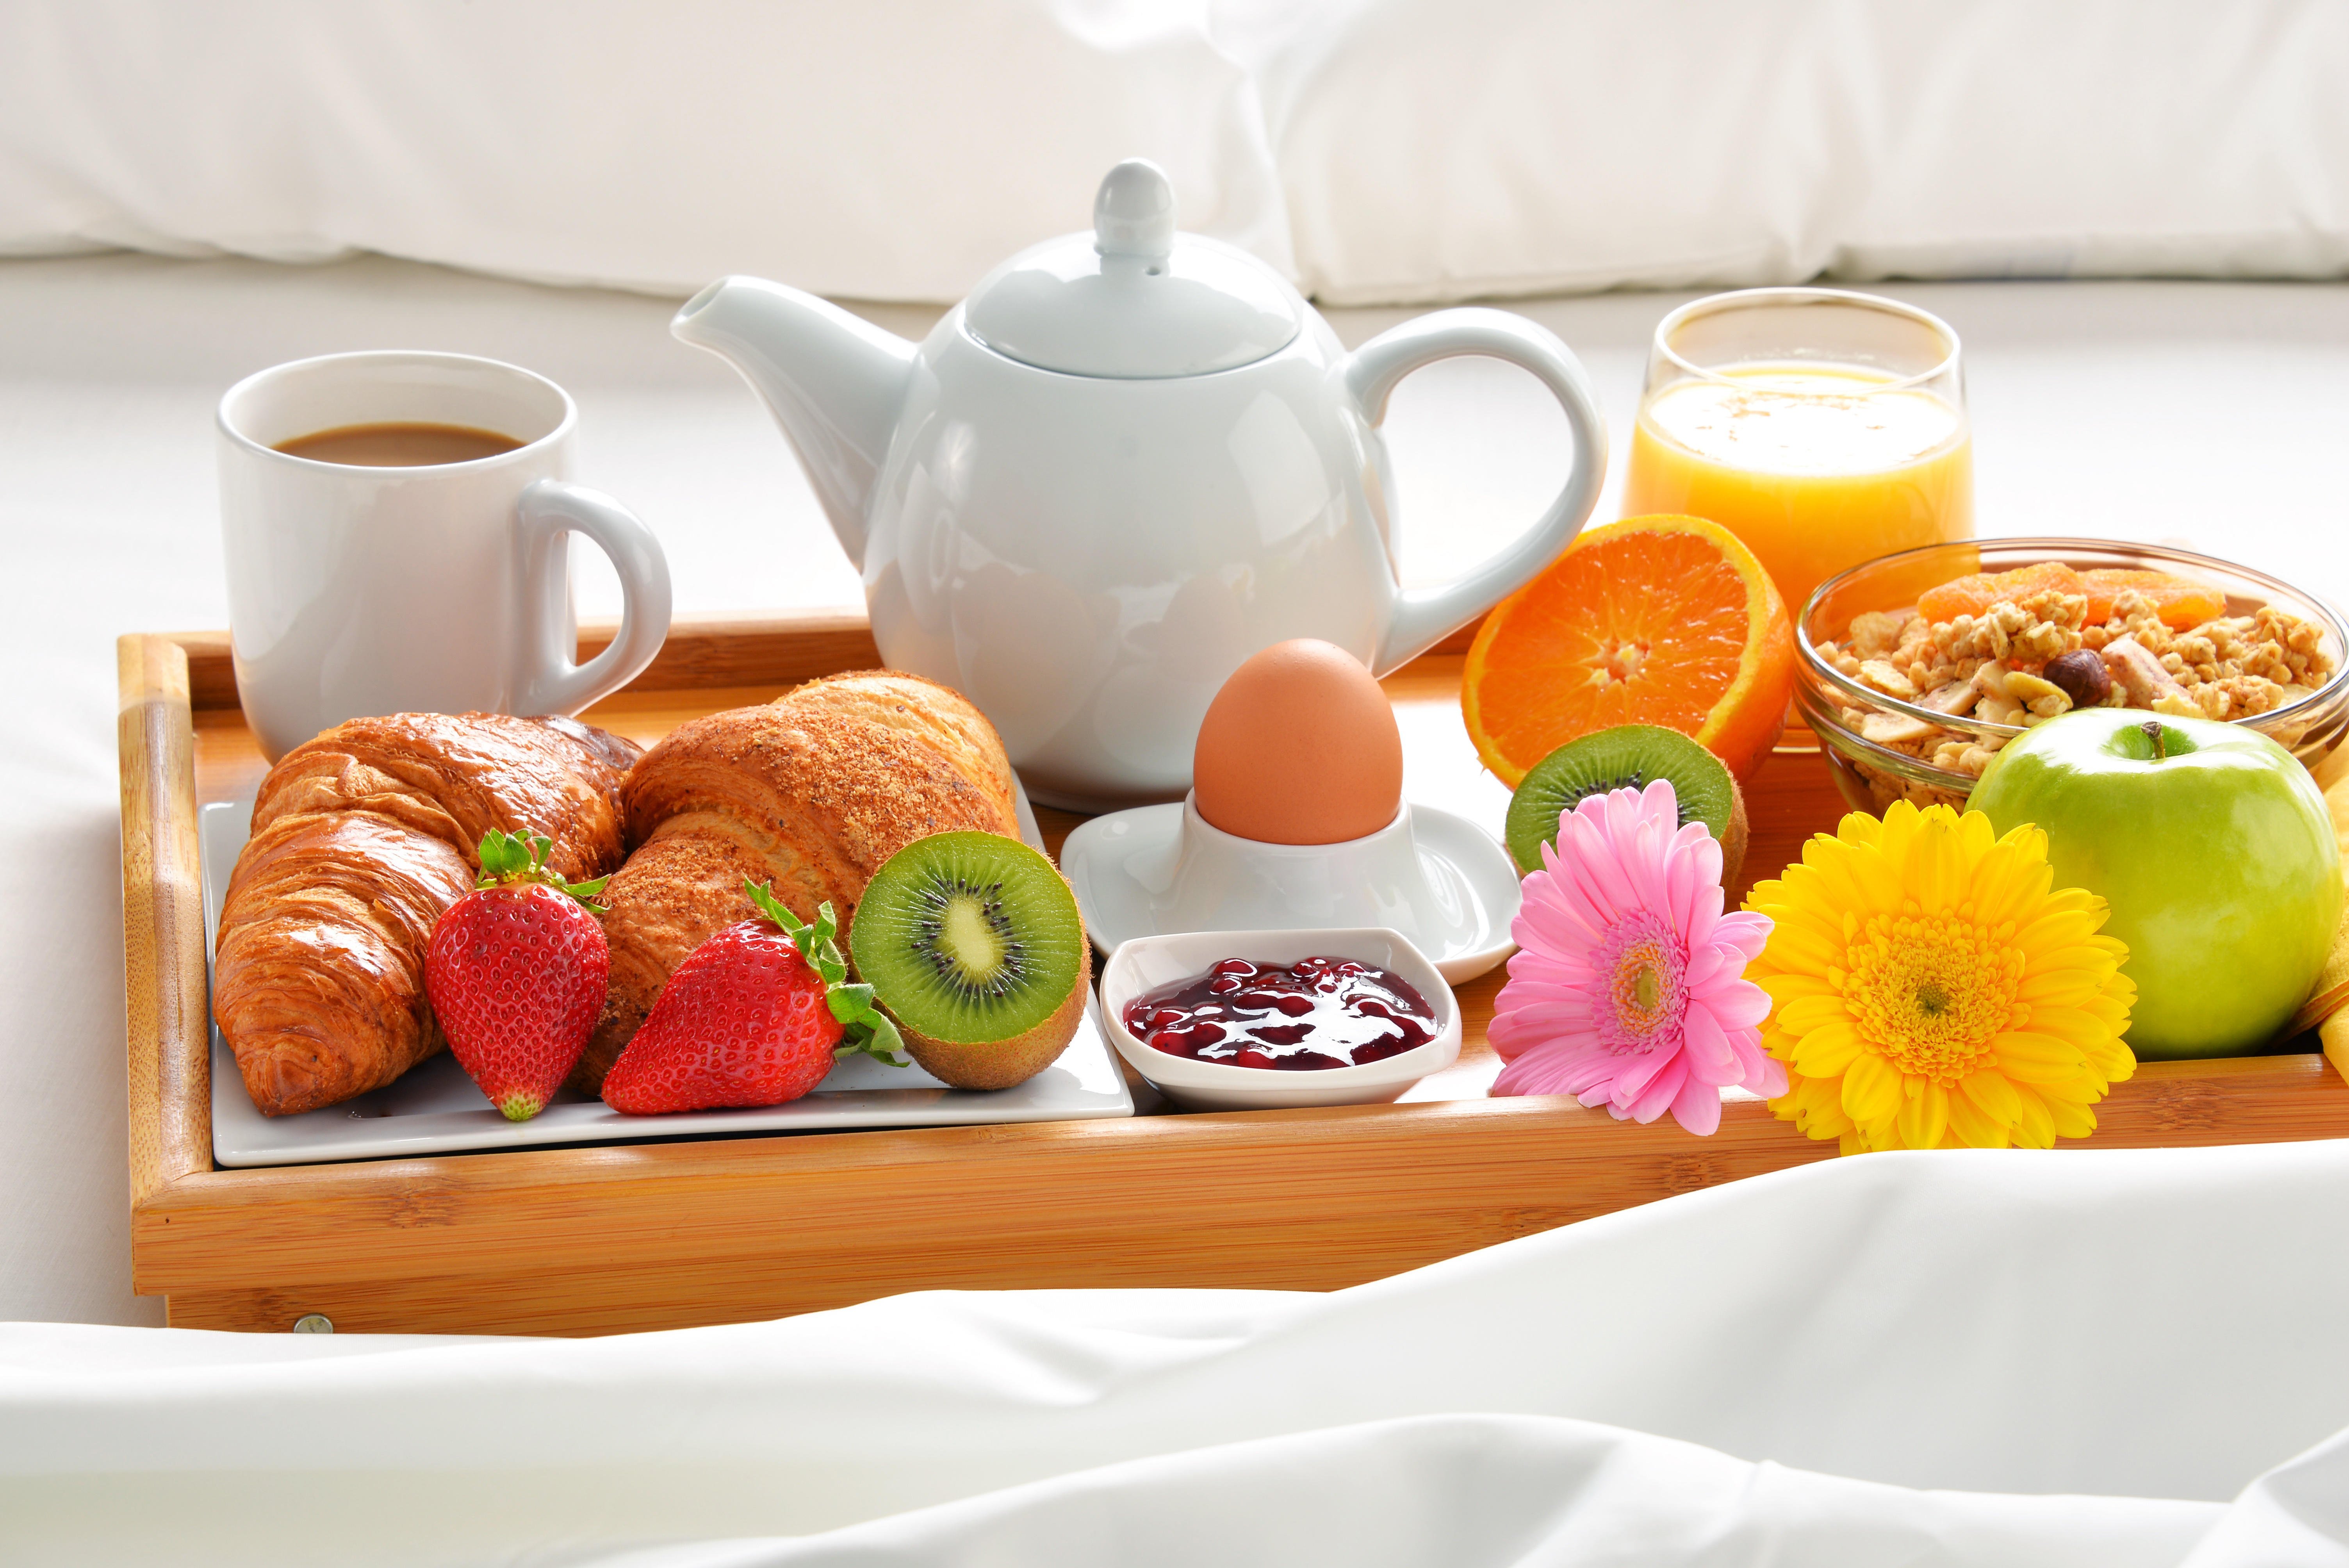 Картинки утро. Утренний завтрак. Завтрак в постель. Красивый утренний завтрак. Доброе утро завтрак.